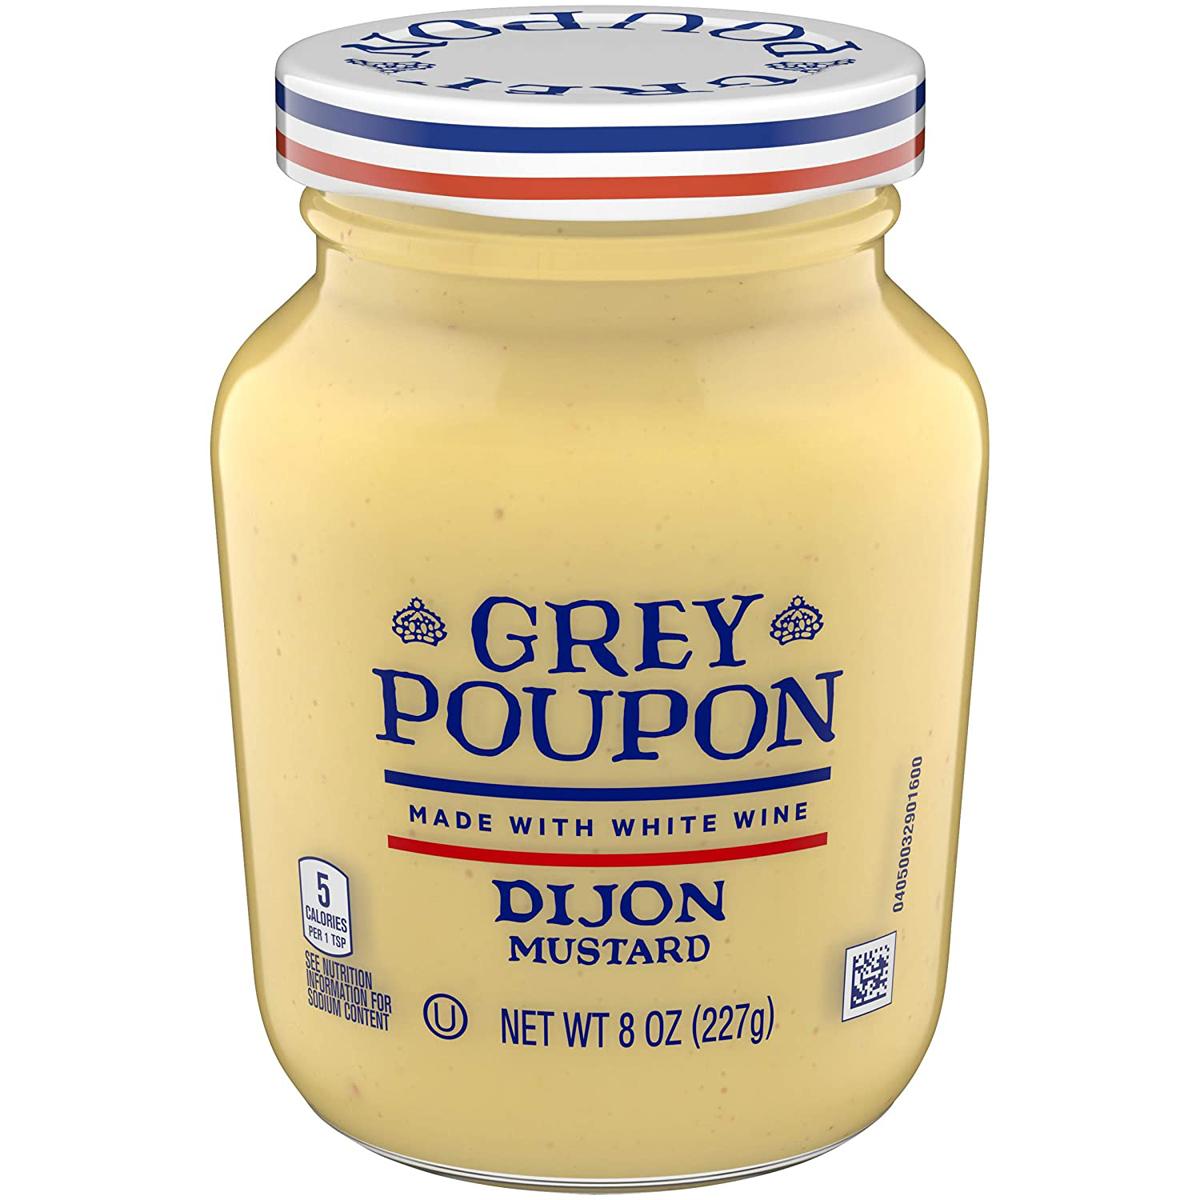 Grey Poupon Dijon Mustard for $1.90 Shipped